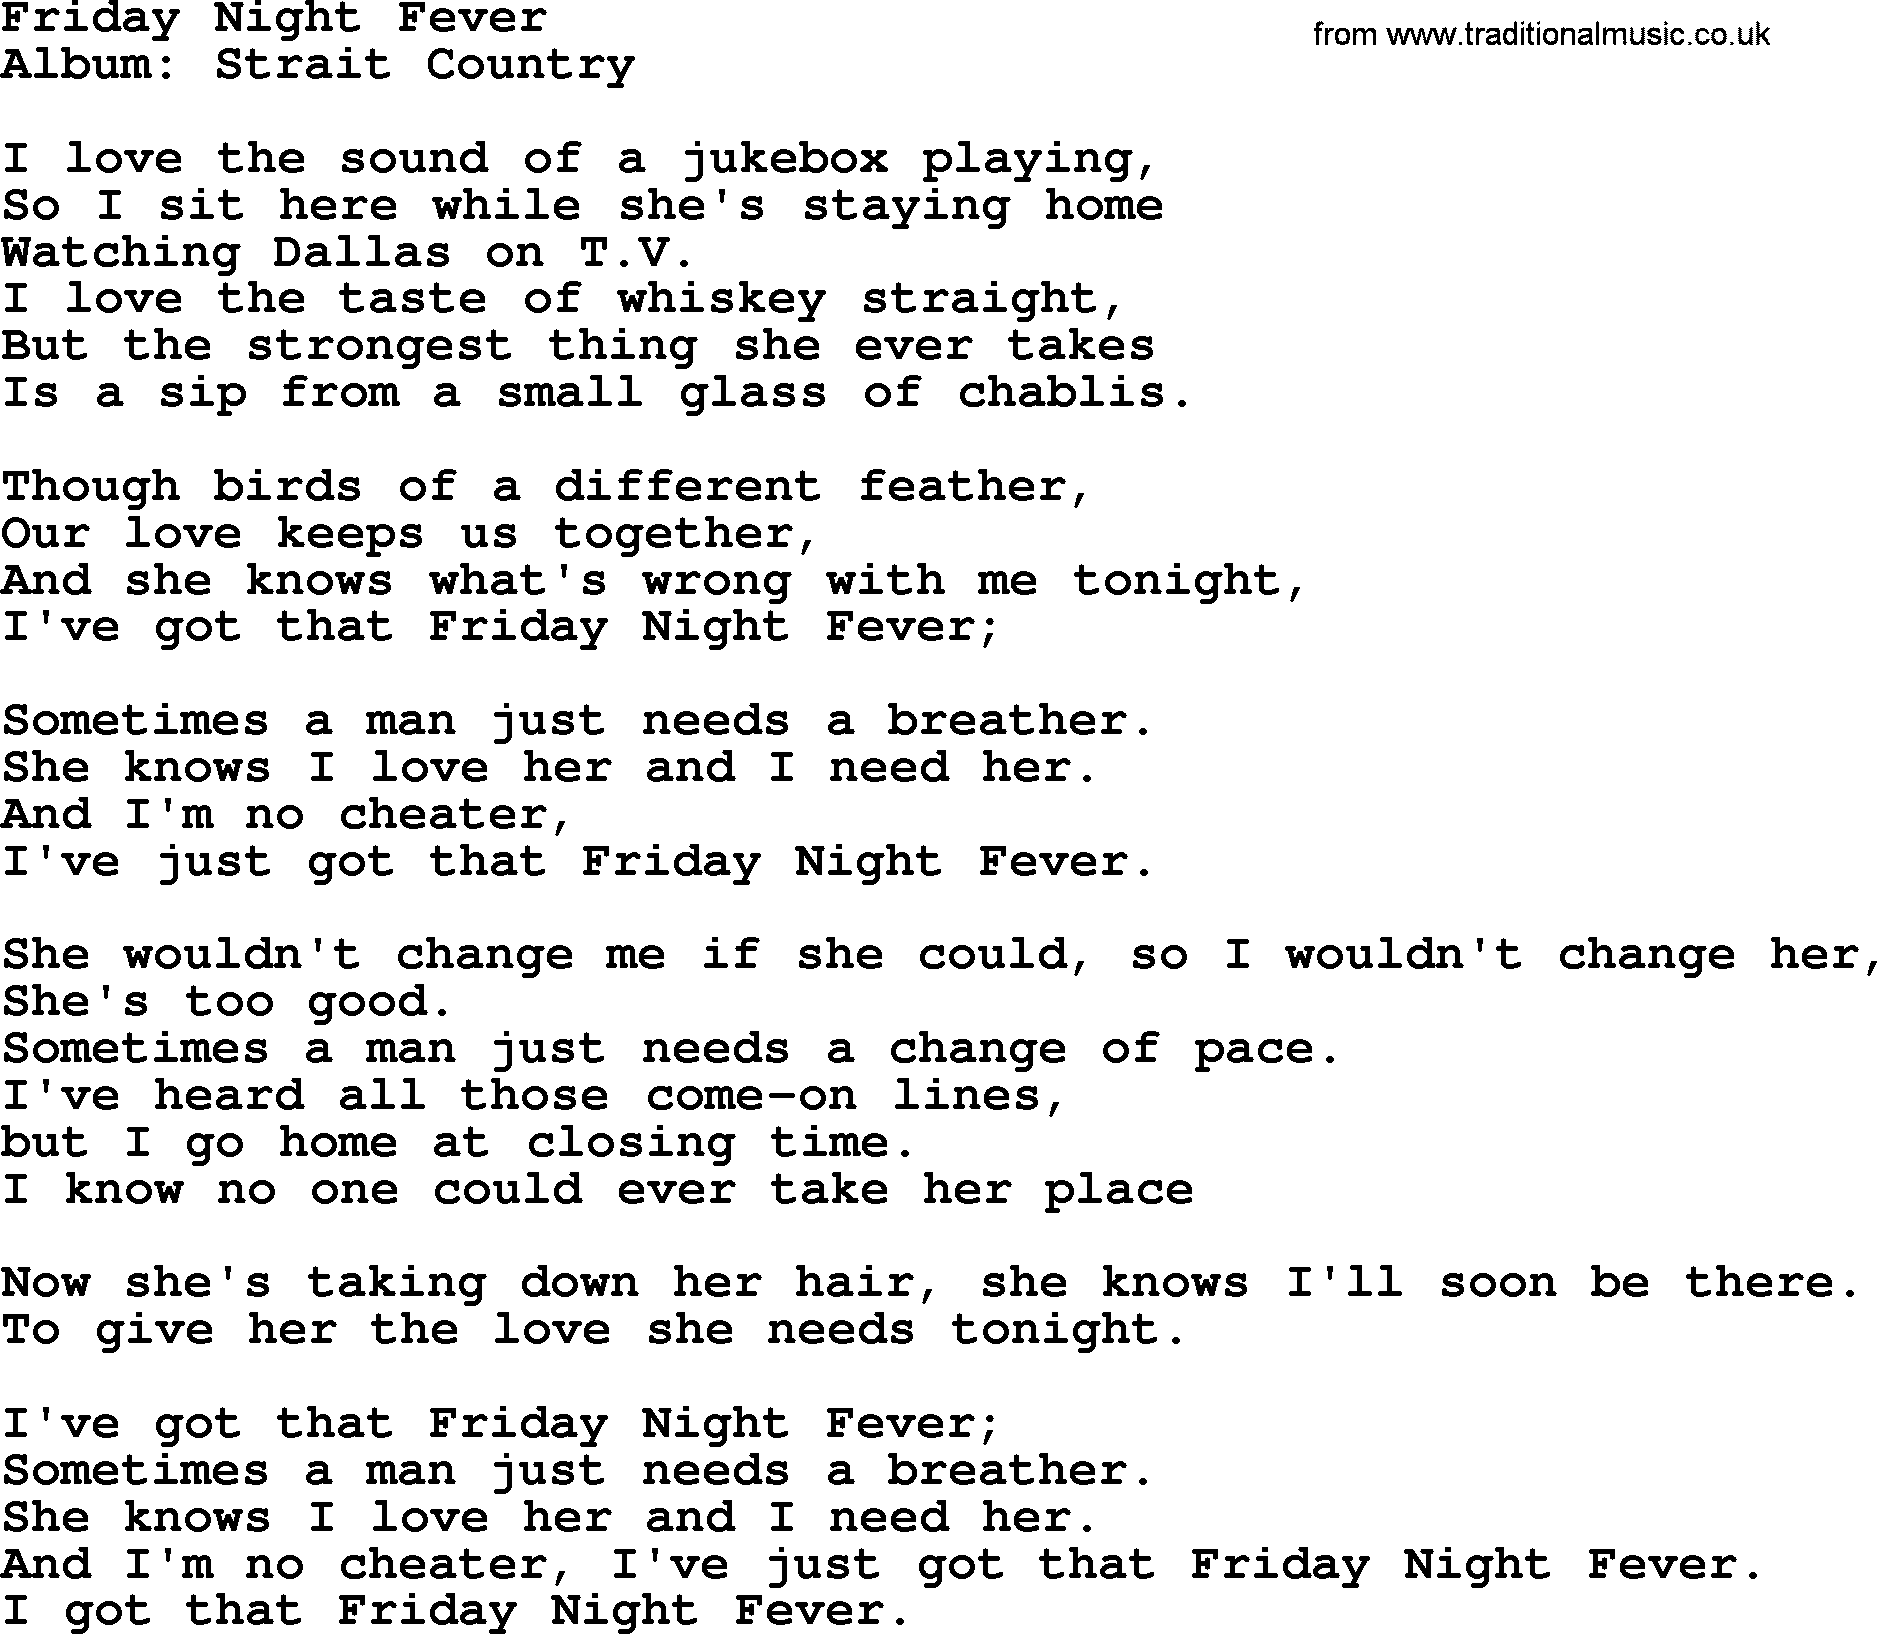 George Strait song: Friday Night Fever, lyrics